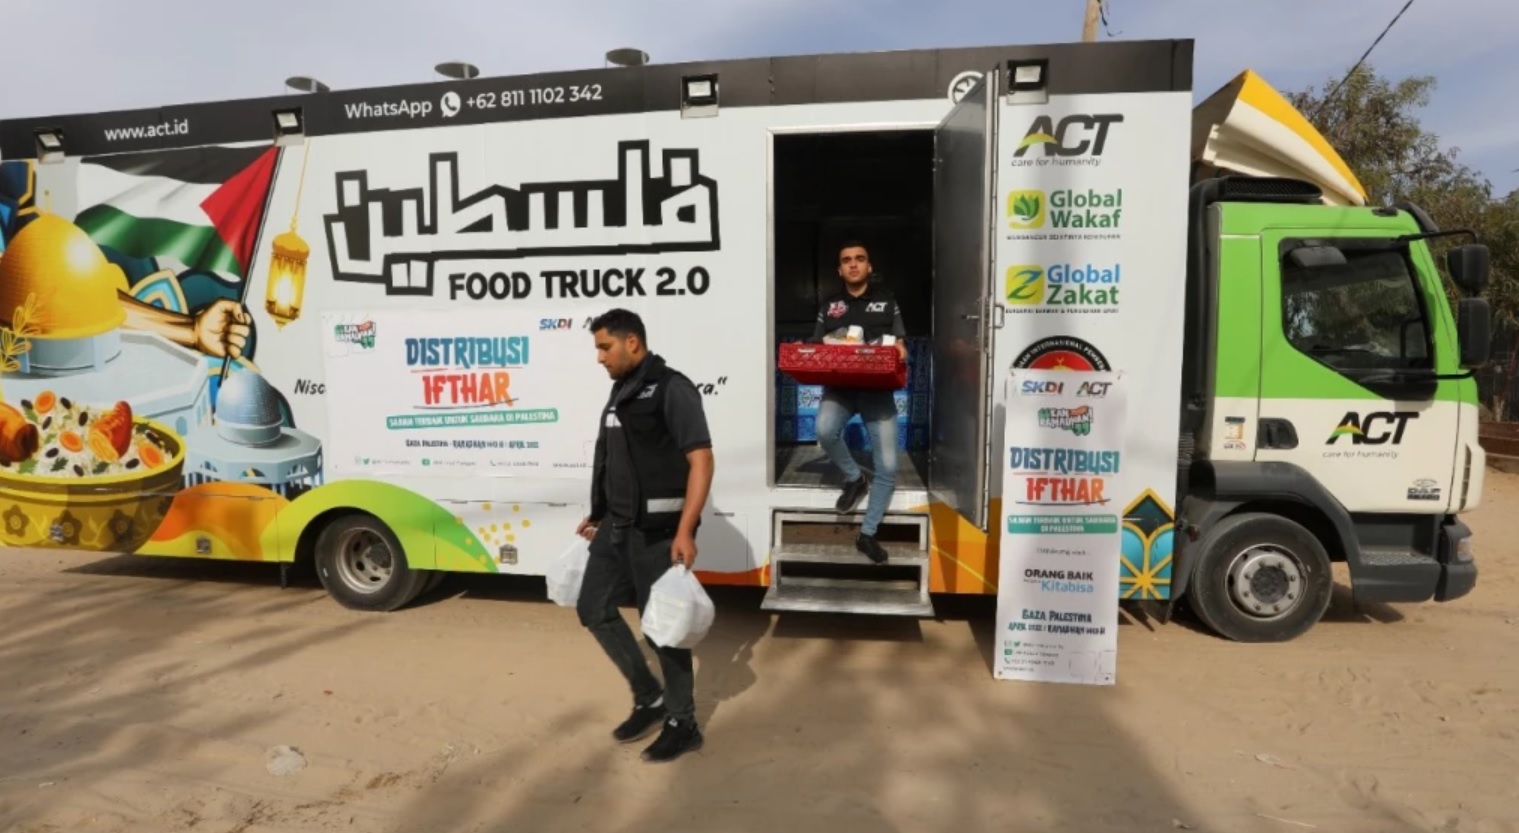 Humanity Food Truck Salurkan Makanan dan Iftar di Gaza